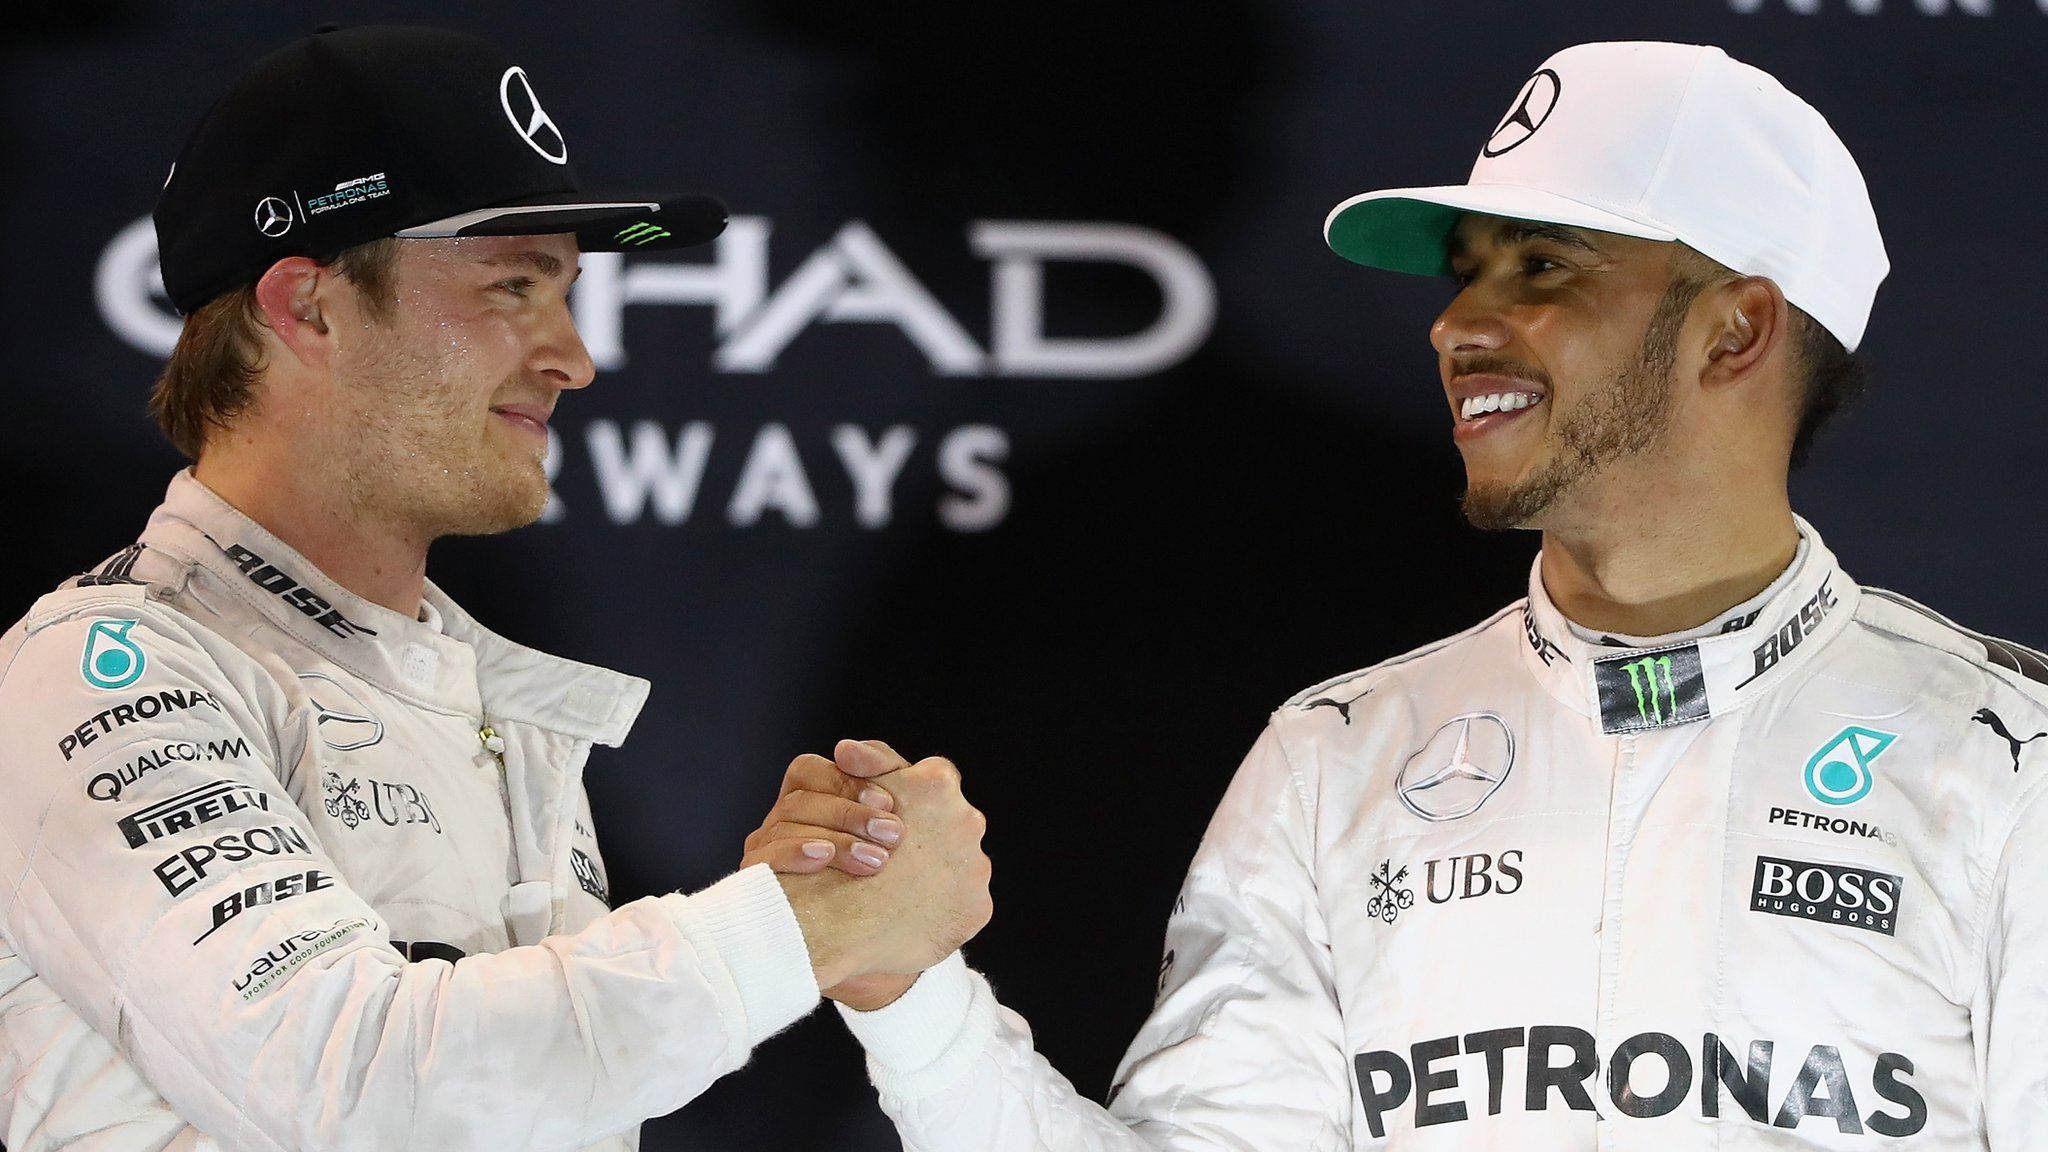 Lewis Hamilton congraulates Nico Rosberg